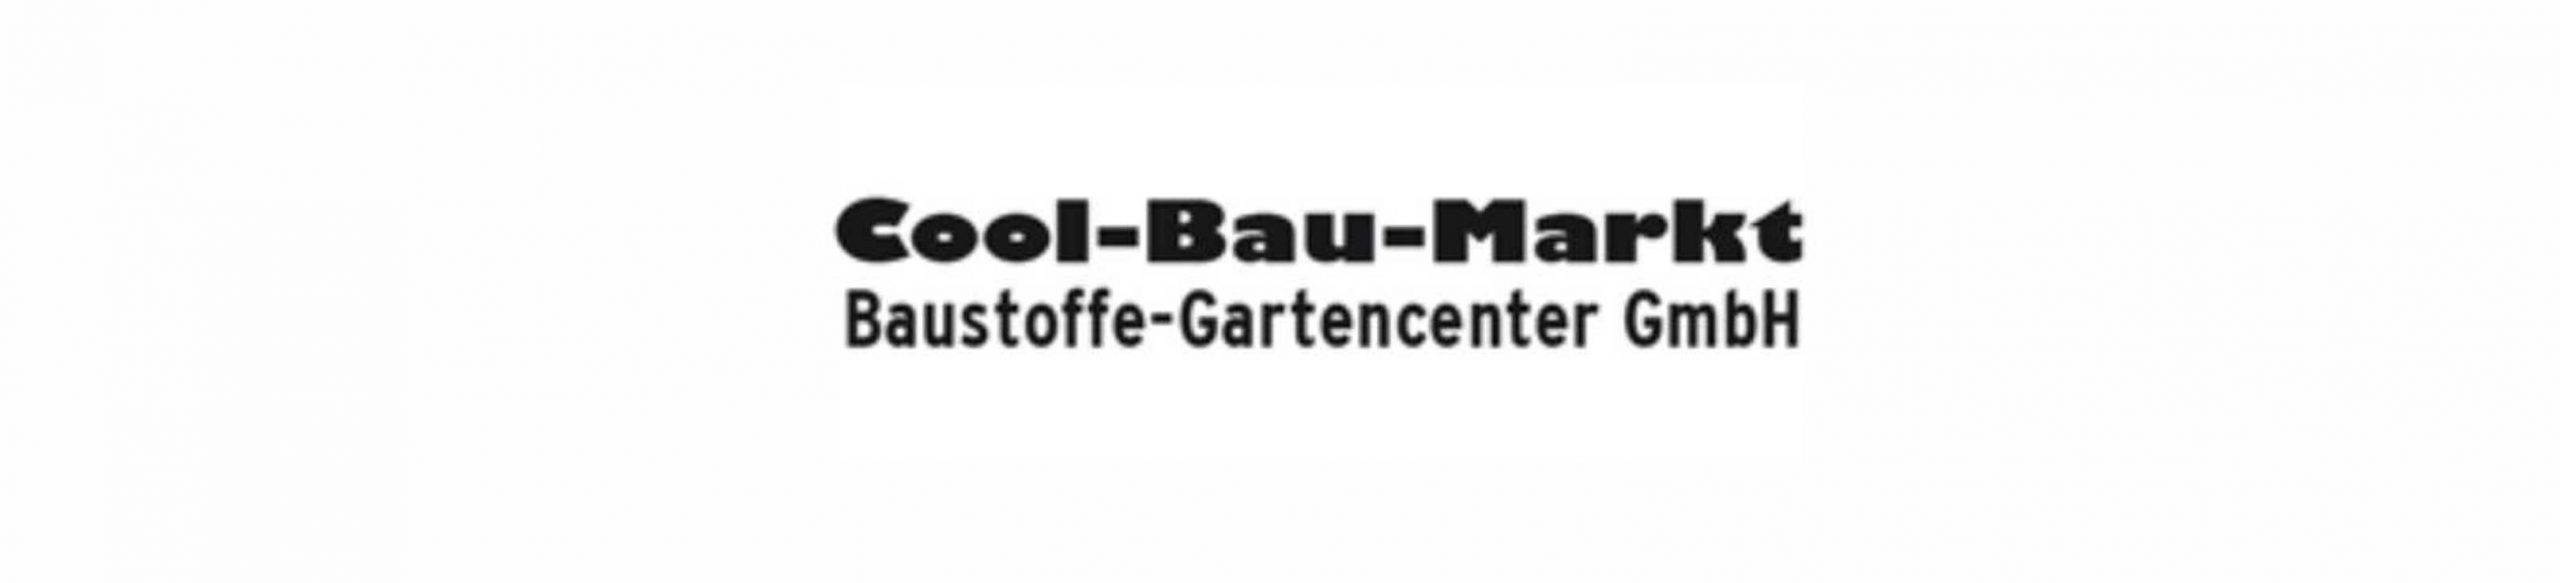 Cool-Bau-Markt Baustoffe-Gartencenter GmbH - Neustadt an der Orla